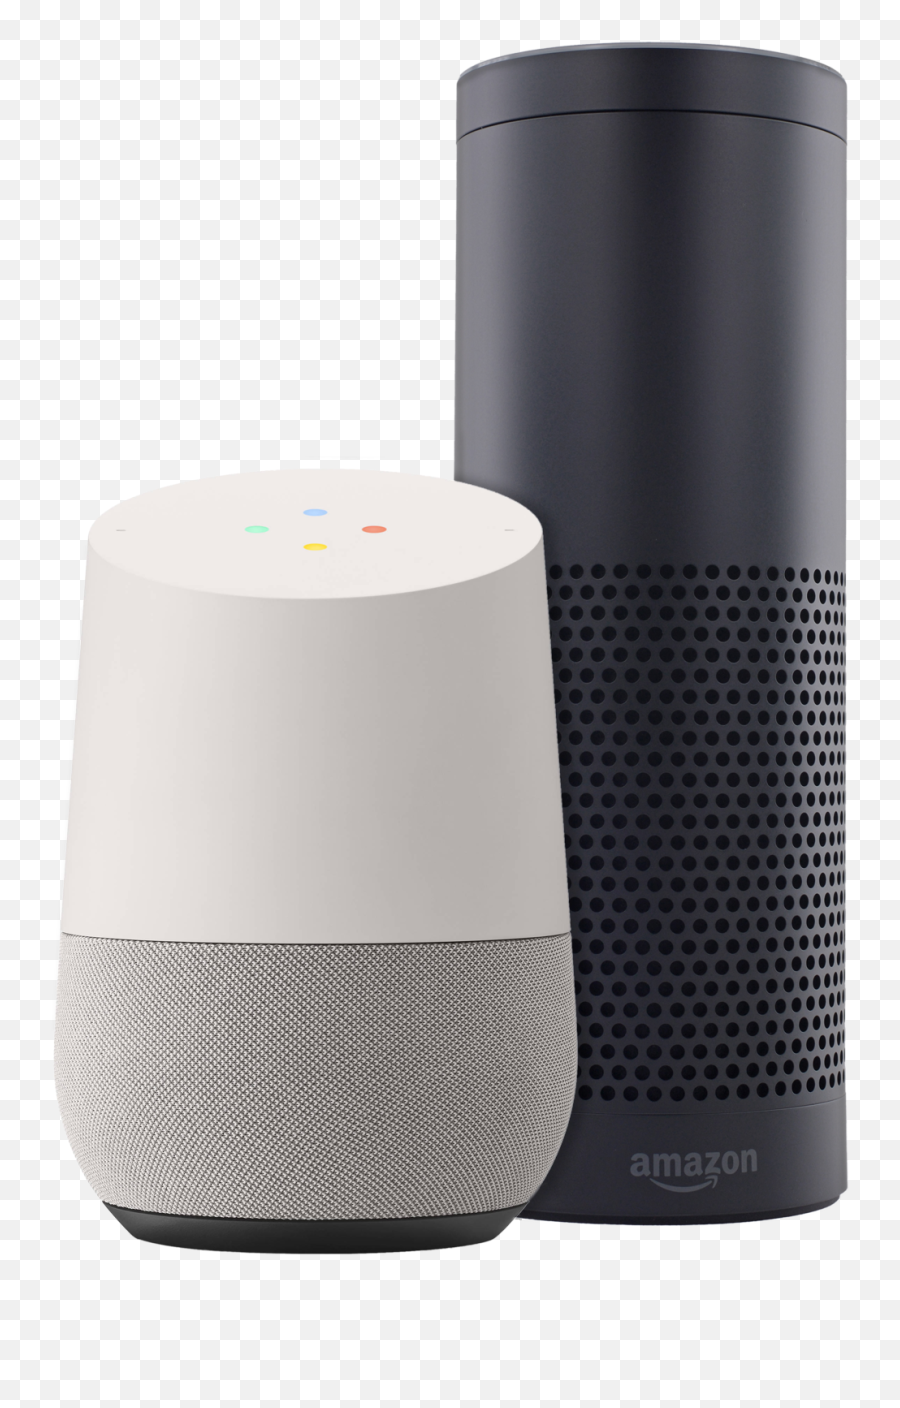 Home Control Assistant - Transparent Amazon Echo Google Home Emoji,Google Home Png